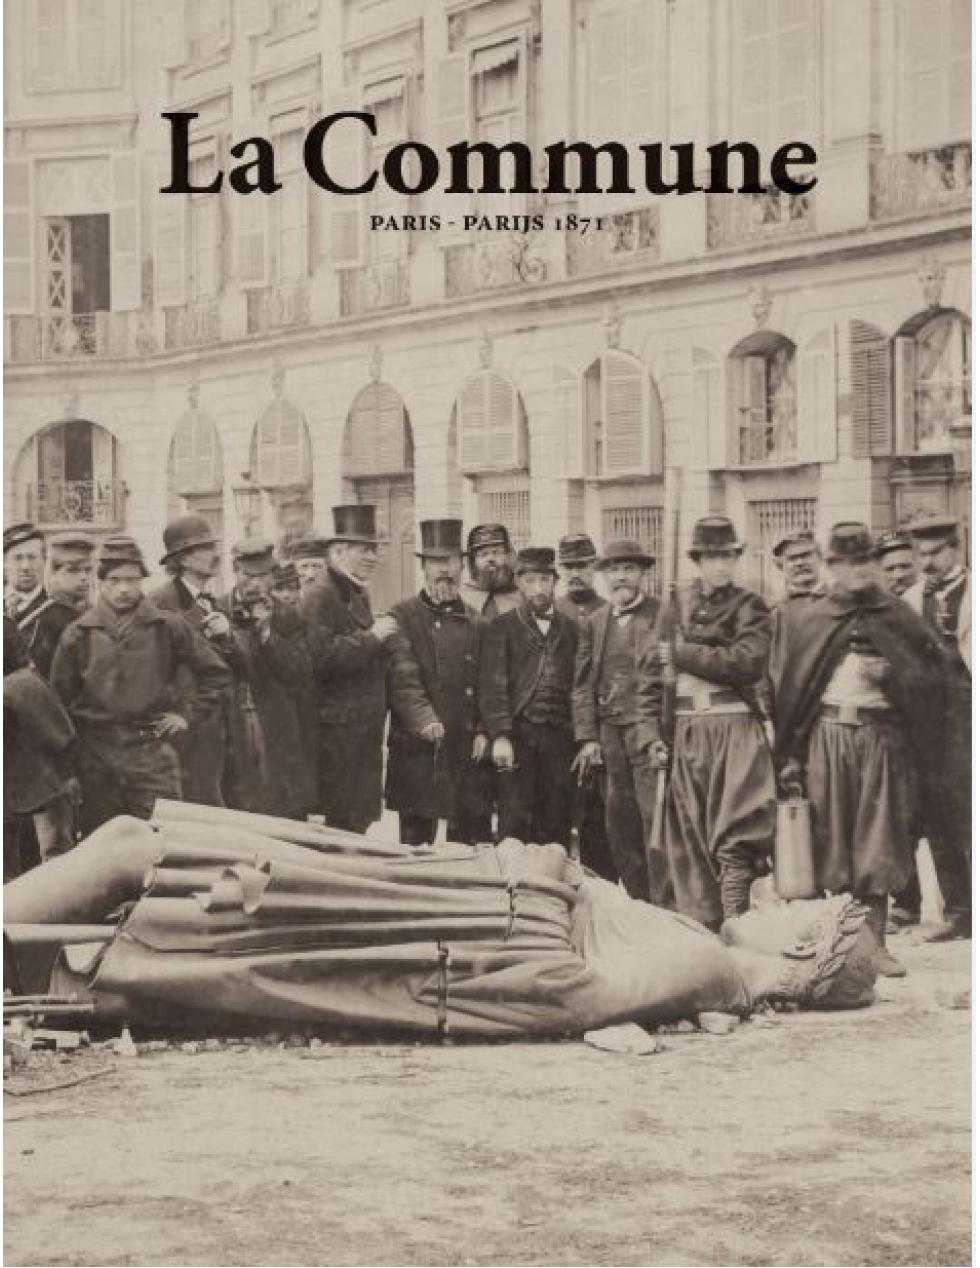 La Commune - Paris-Parijs 1871